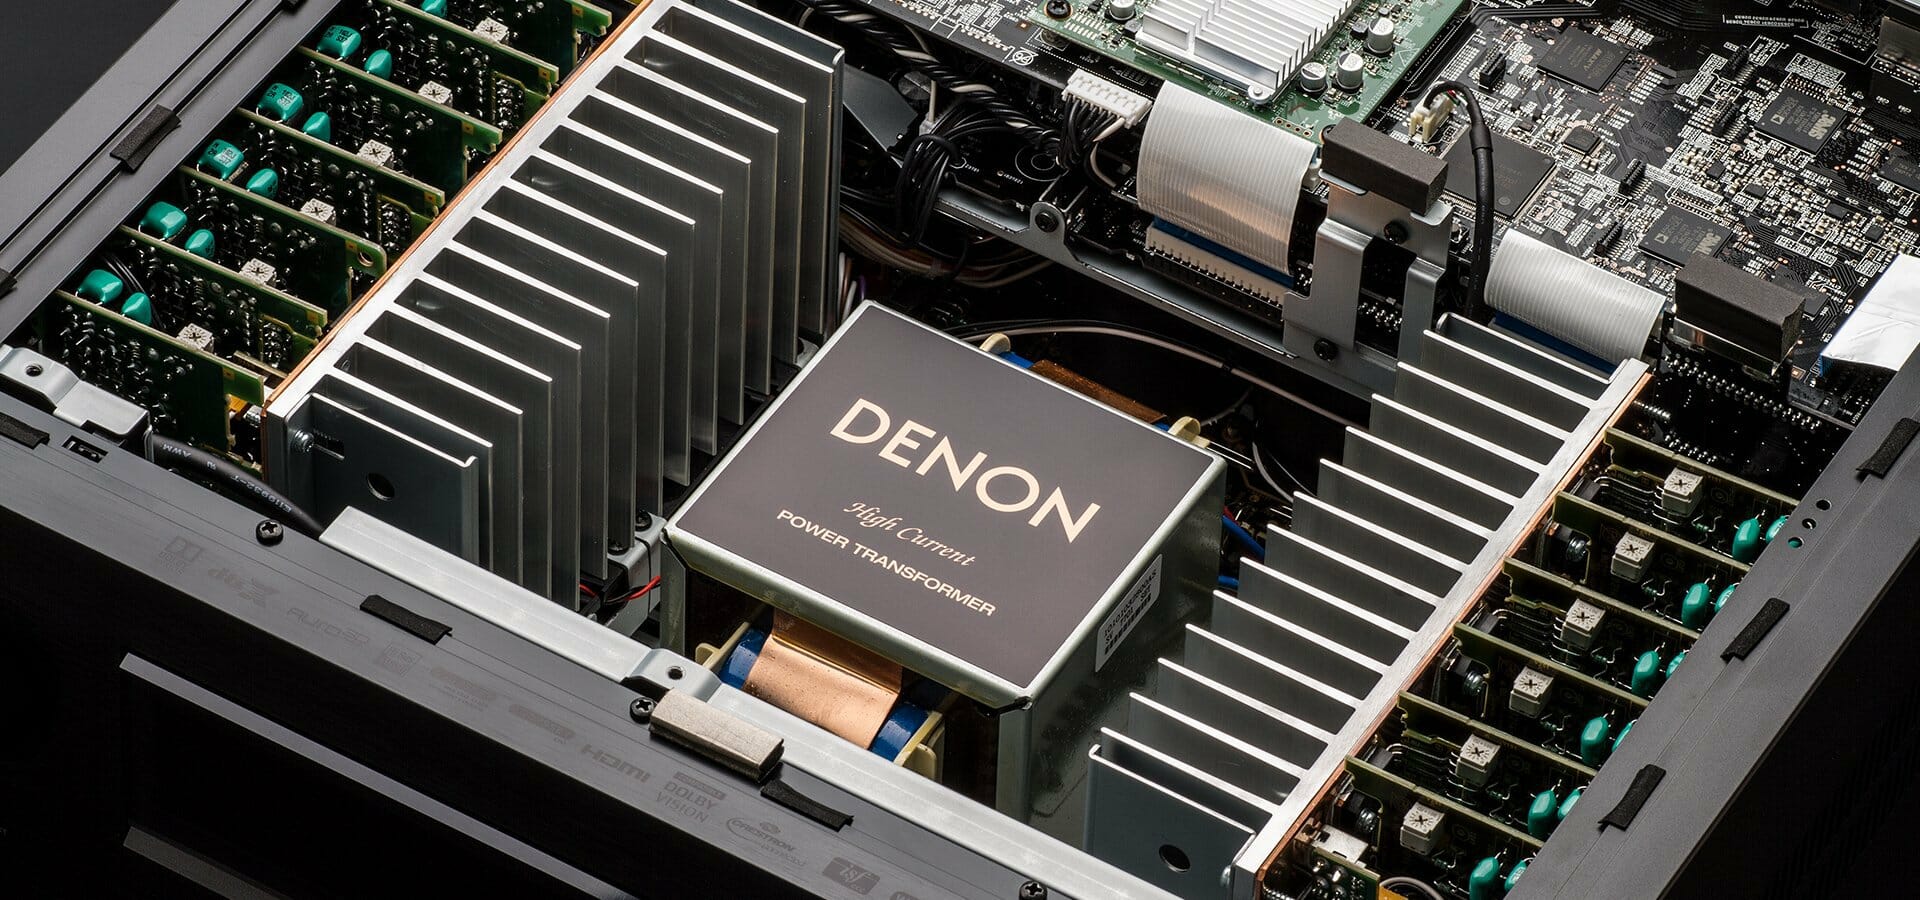 Dedykowany procesor amplitunera Denon AVC-X8500H